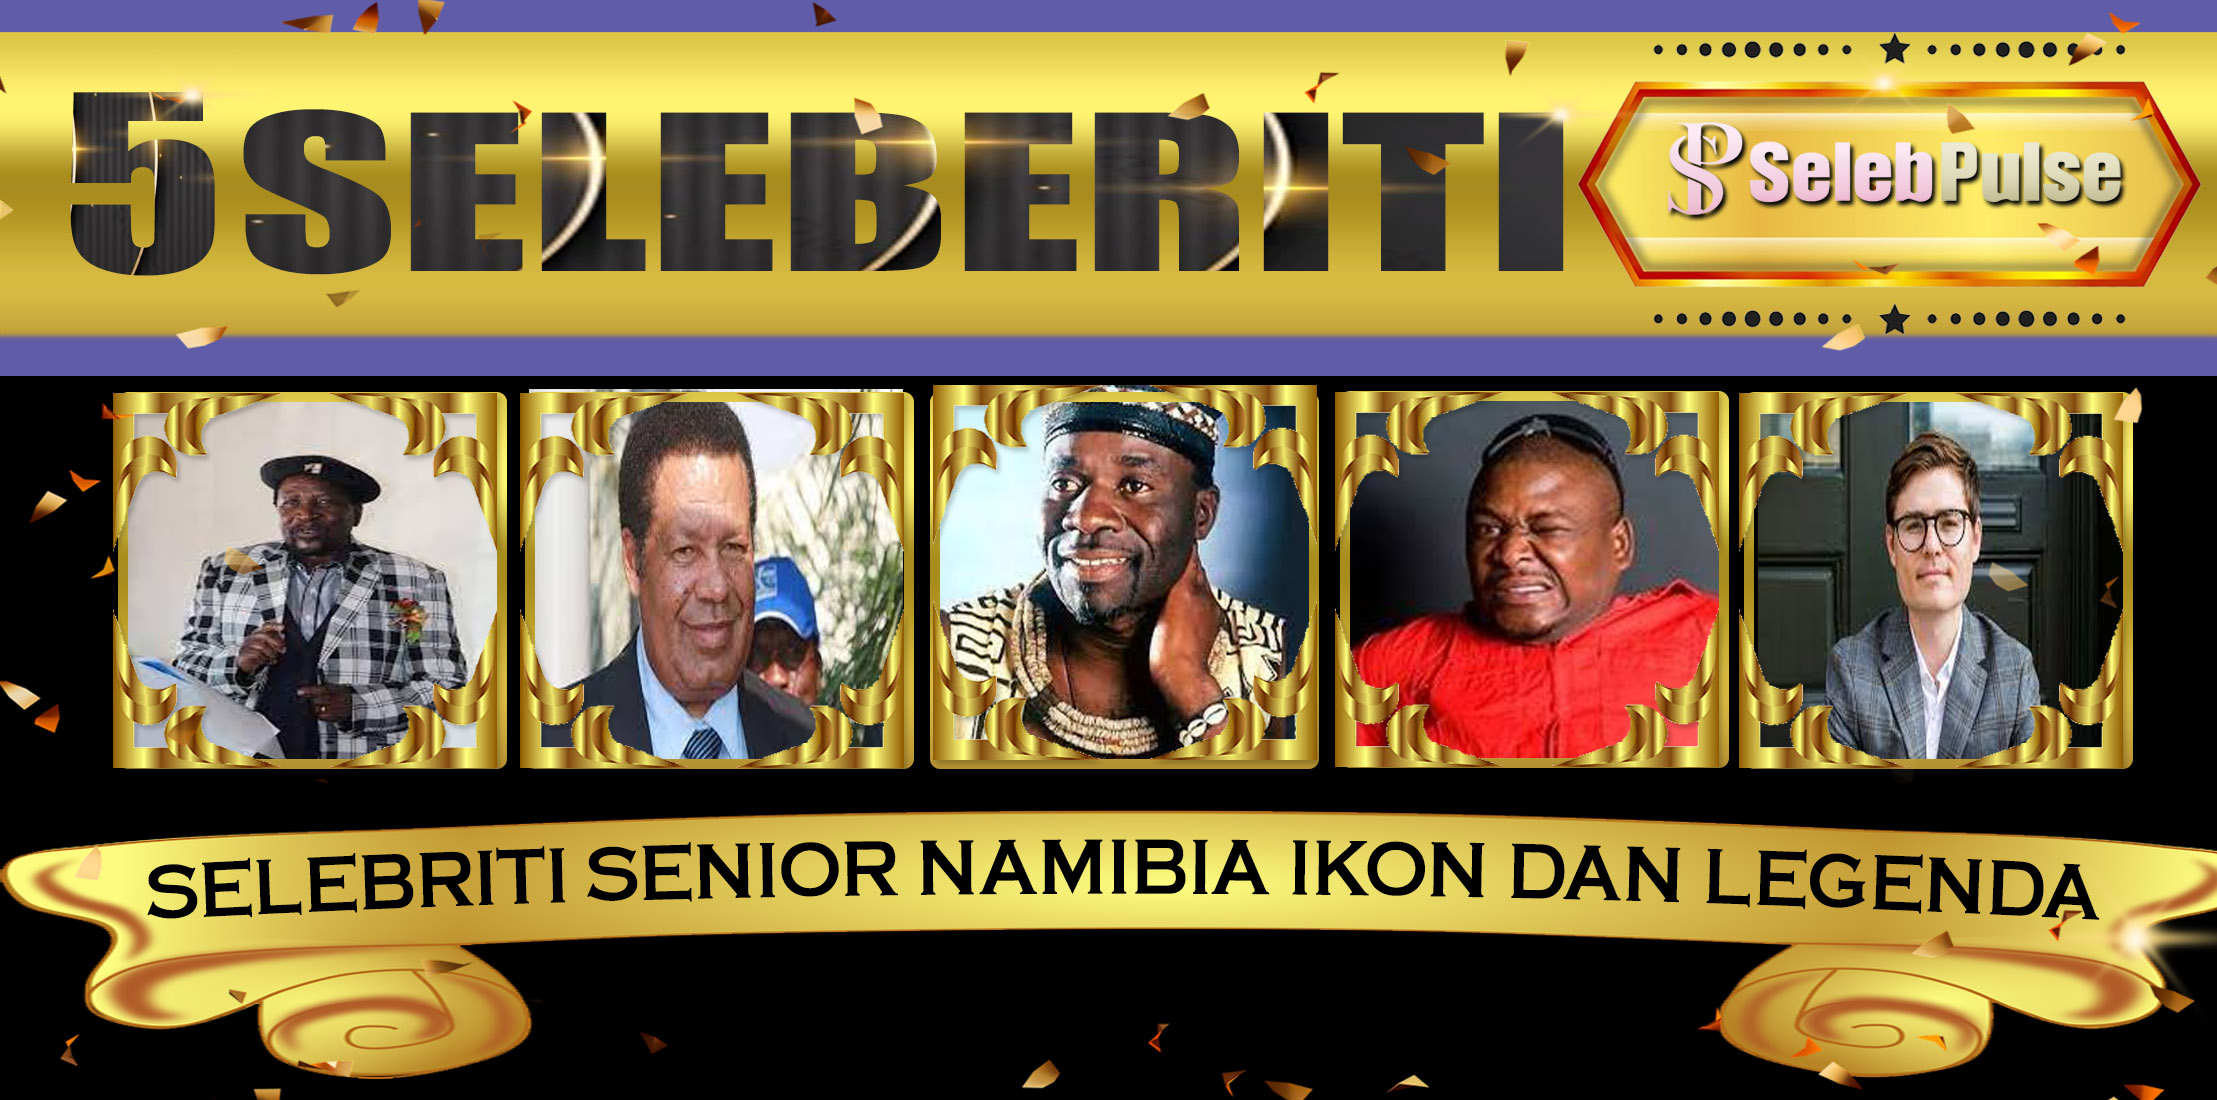 5 Selebriti Senior Namibia